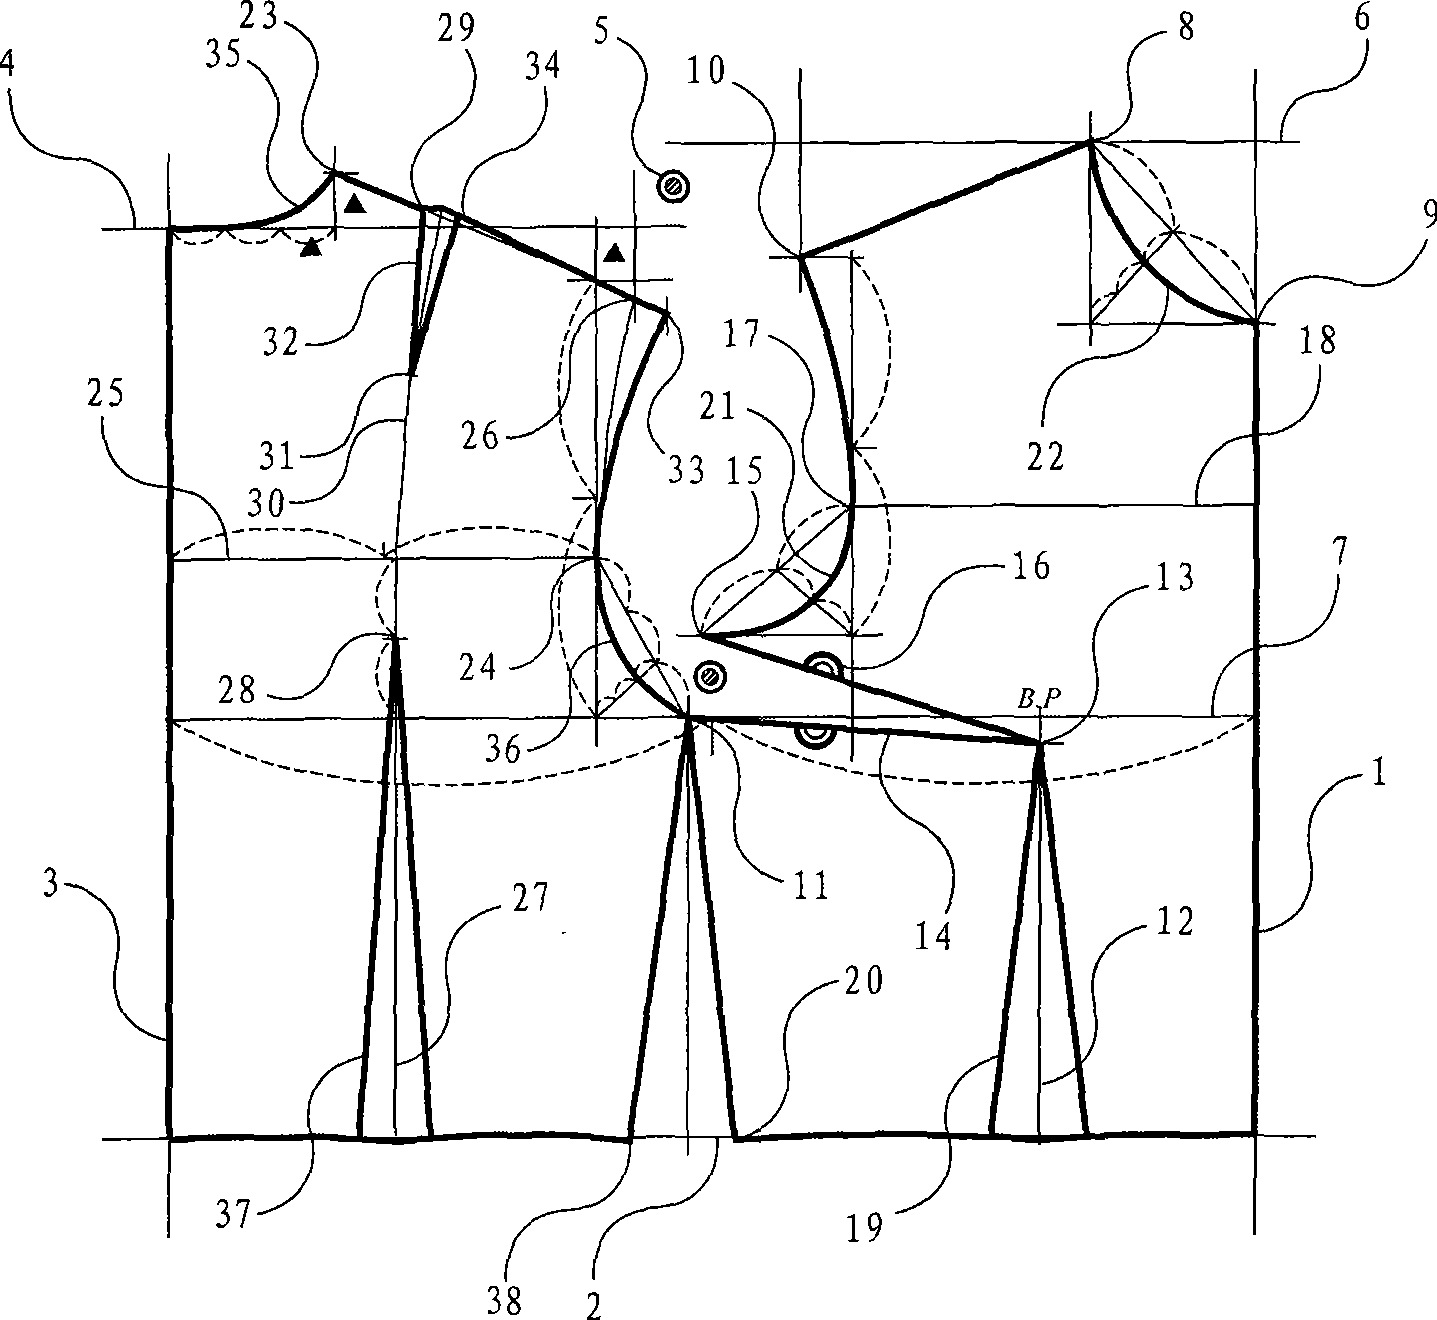 Structure design method for suit-dress pattern